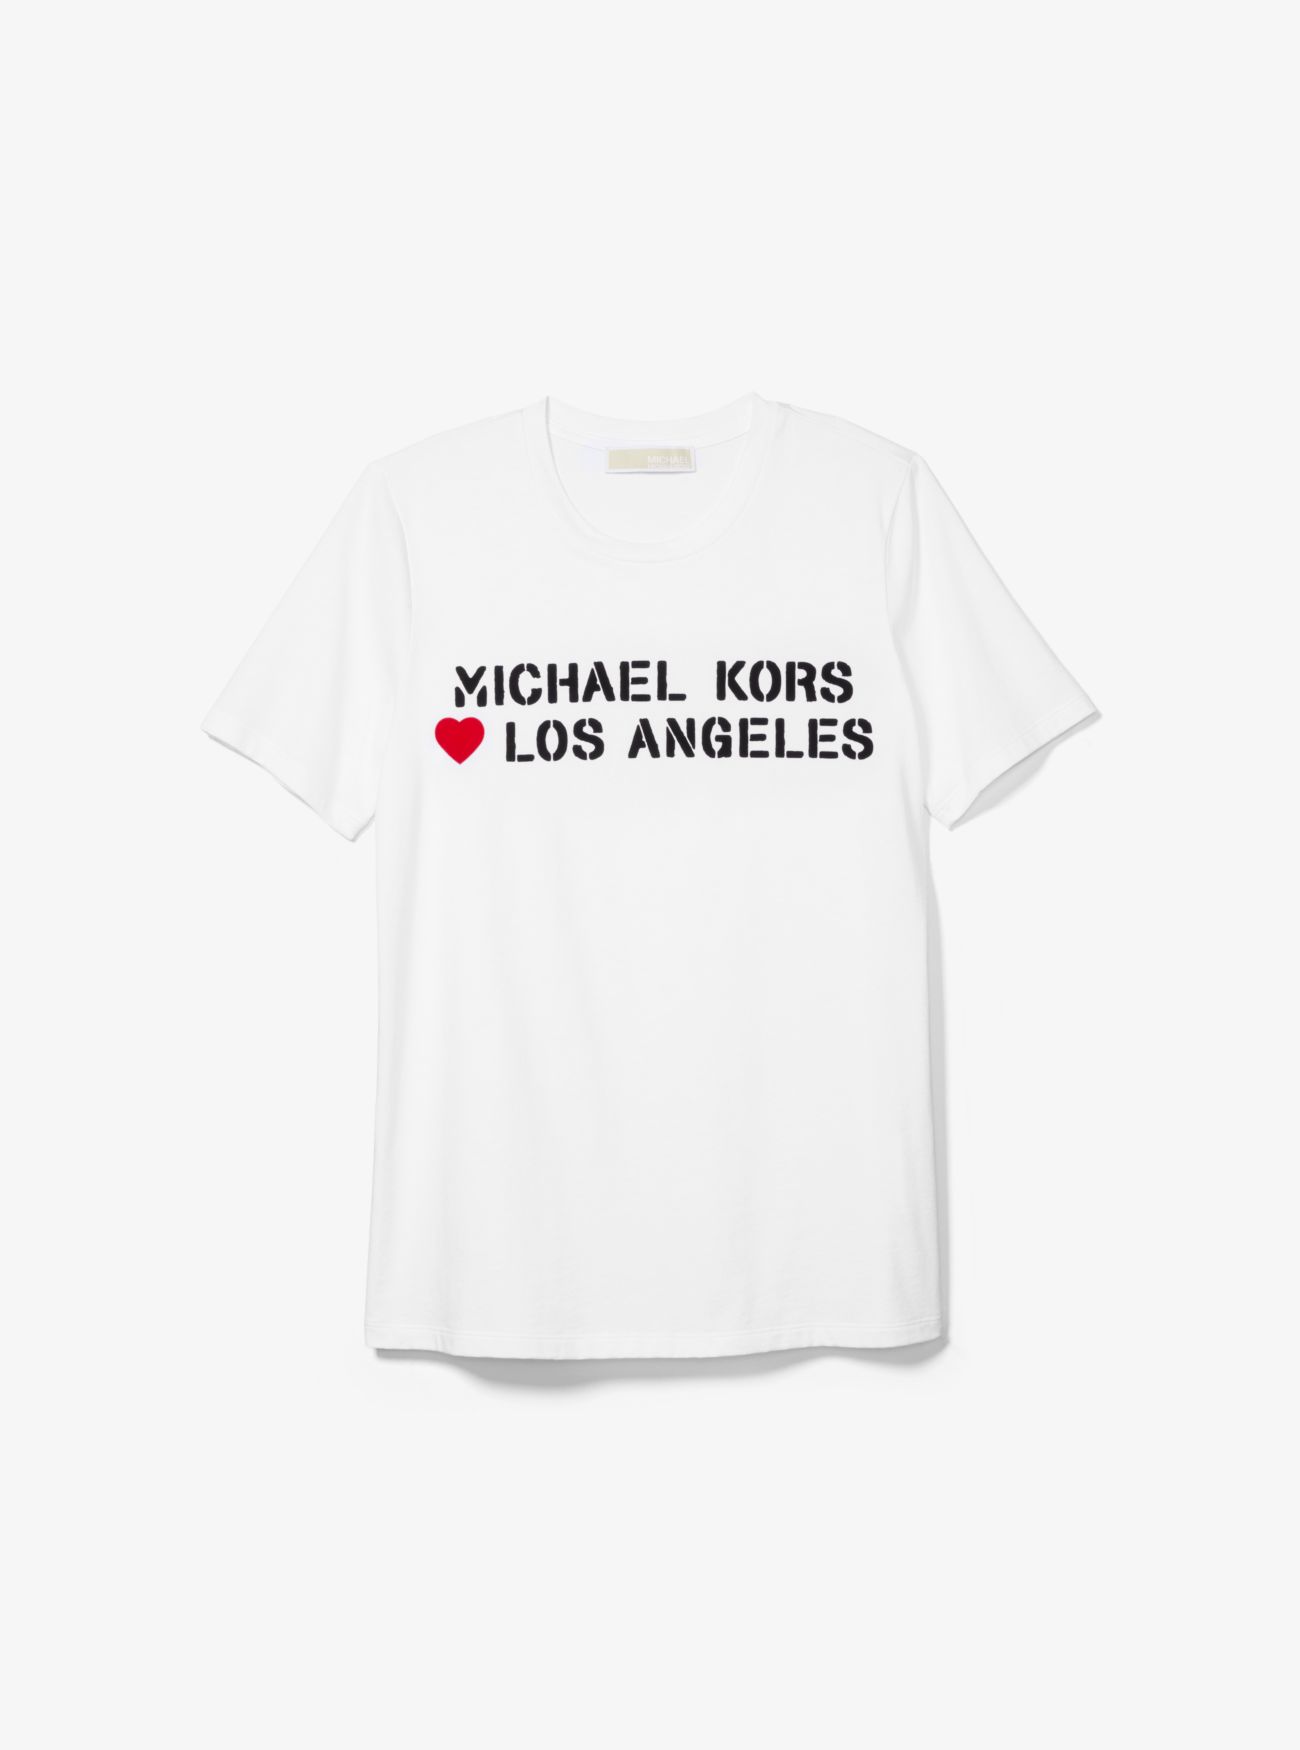 Футболка унисекс из хлопкового джерси MK Loves Los Angeles Michael Kors